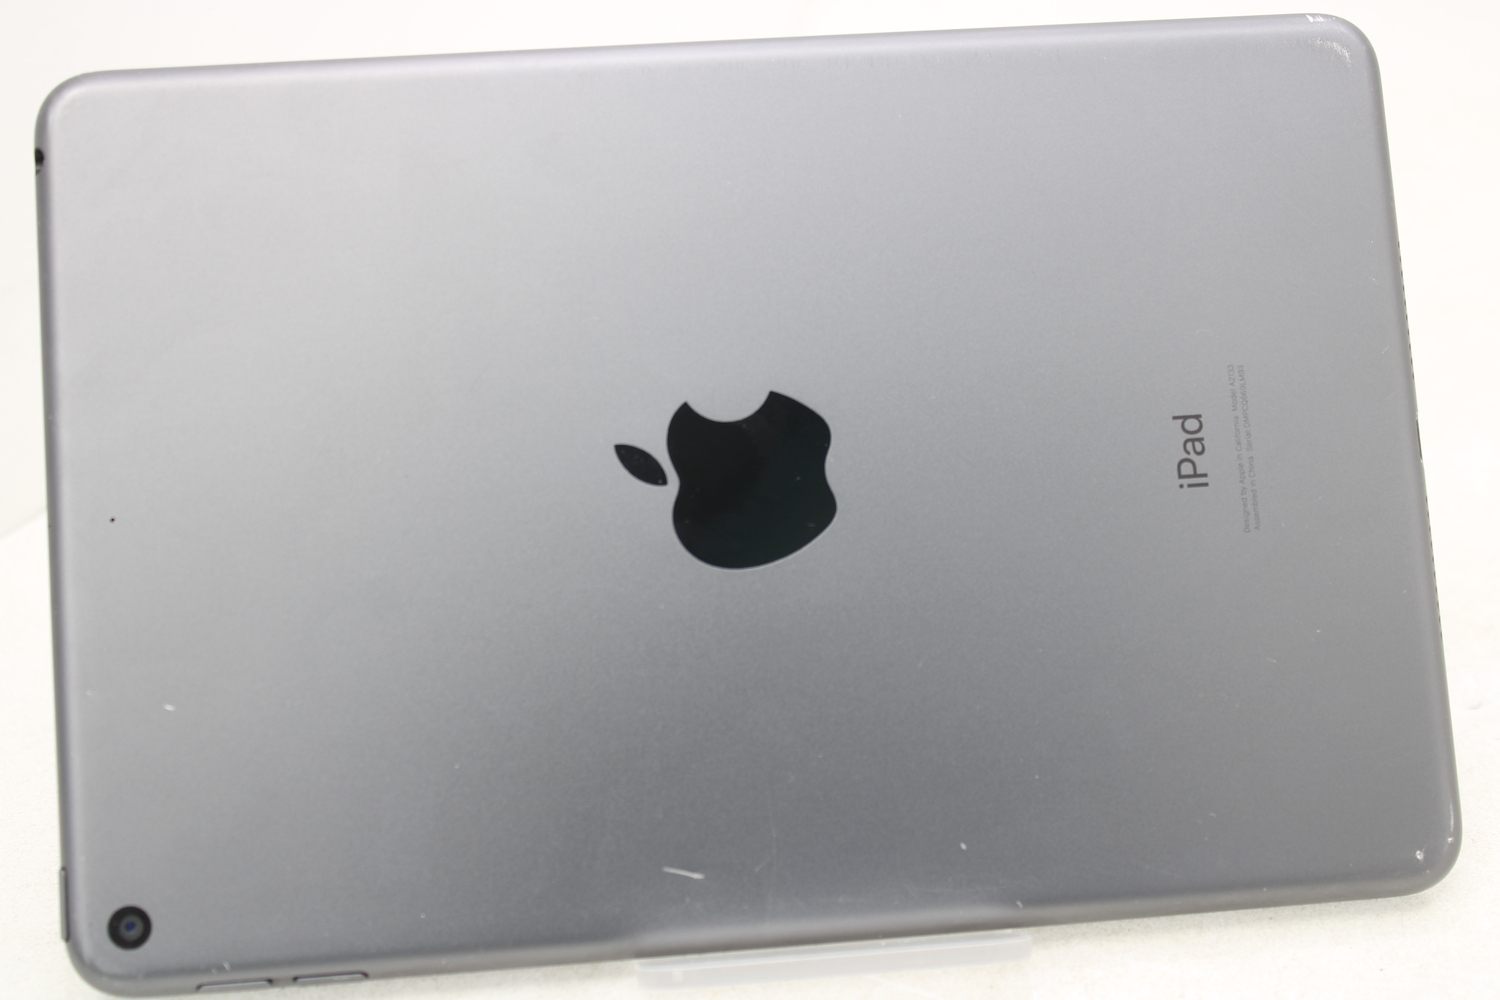 Apple a2133 Ipad mini (5th generation) 64gb space gray